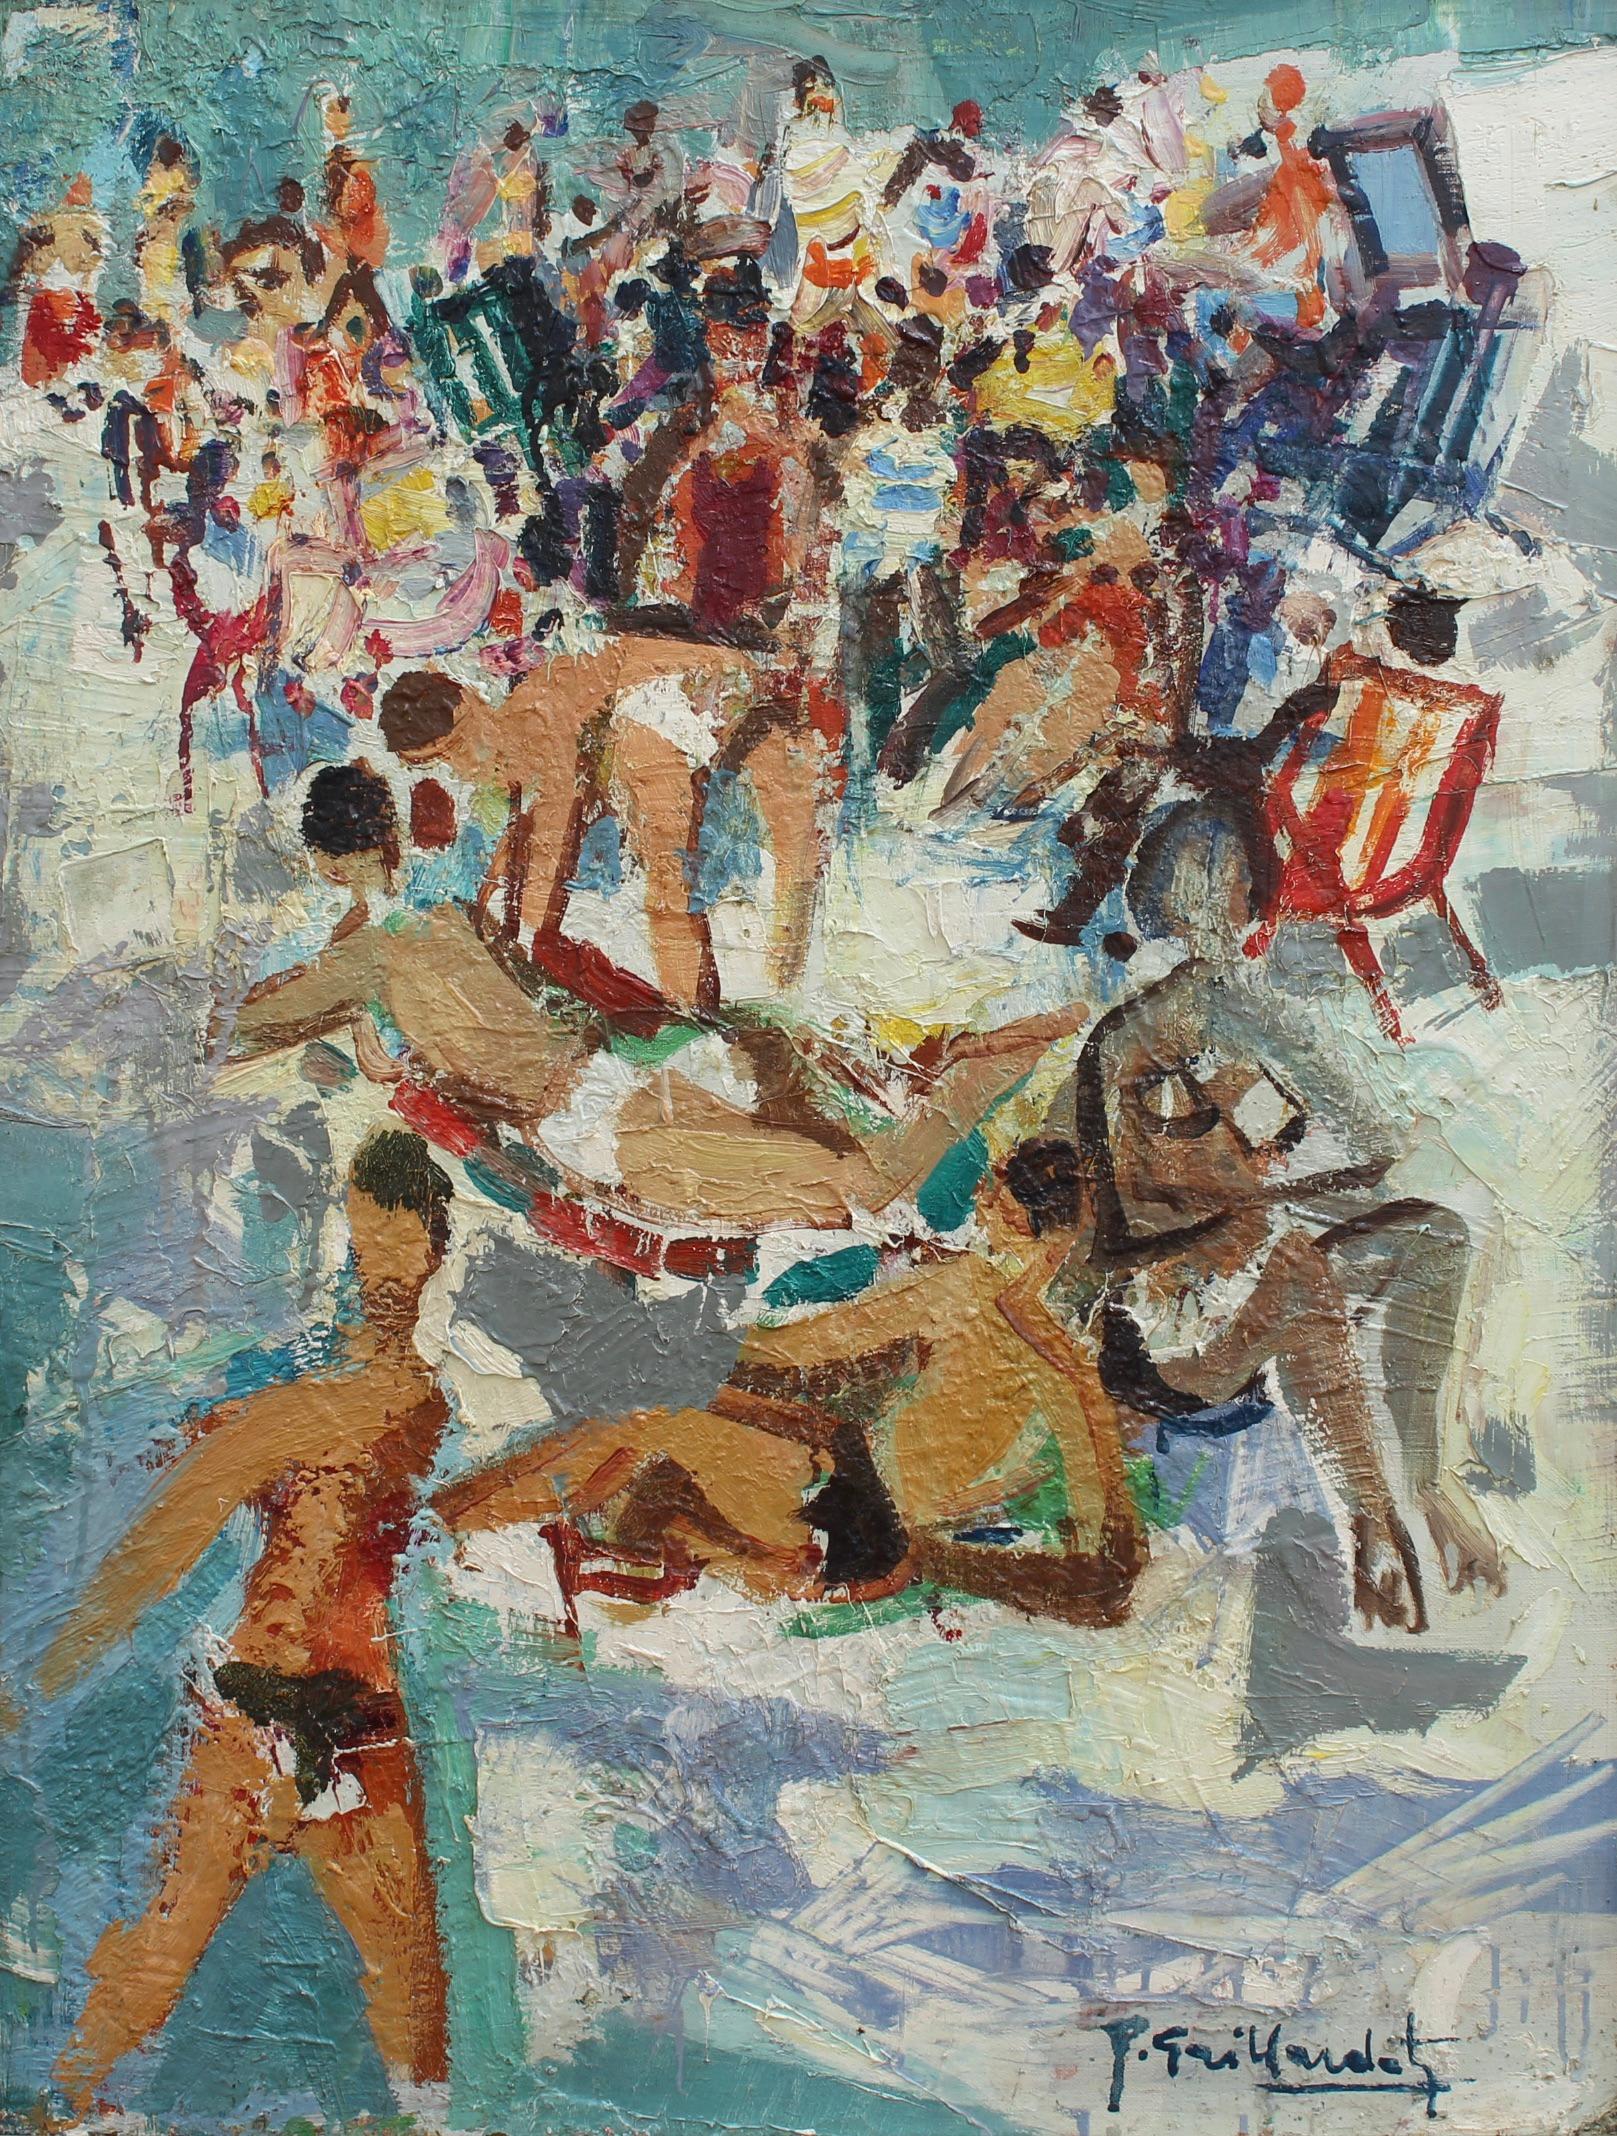 Pierre Gaillardot Portrait Painting - The Beach on the French Riviera